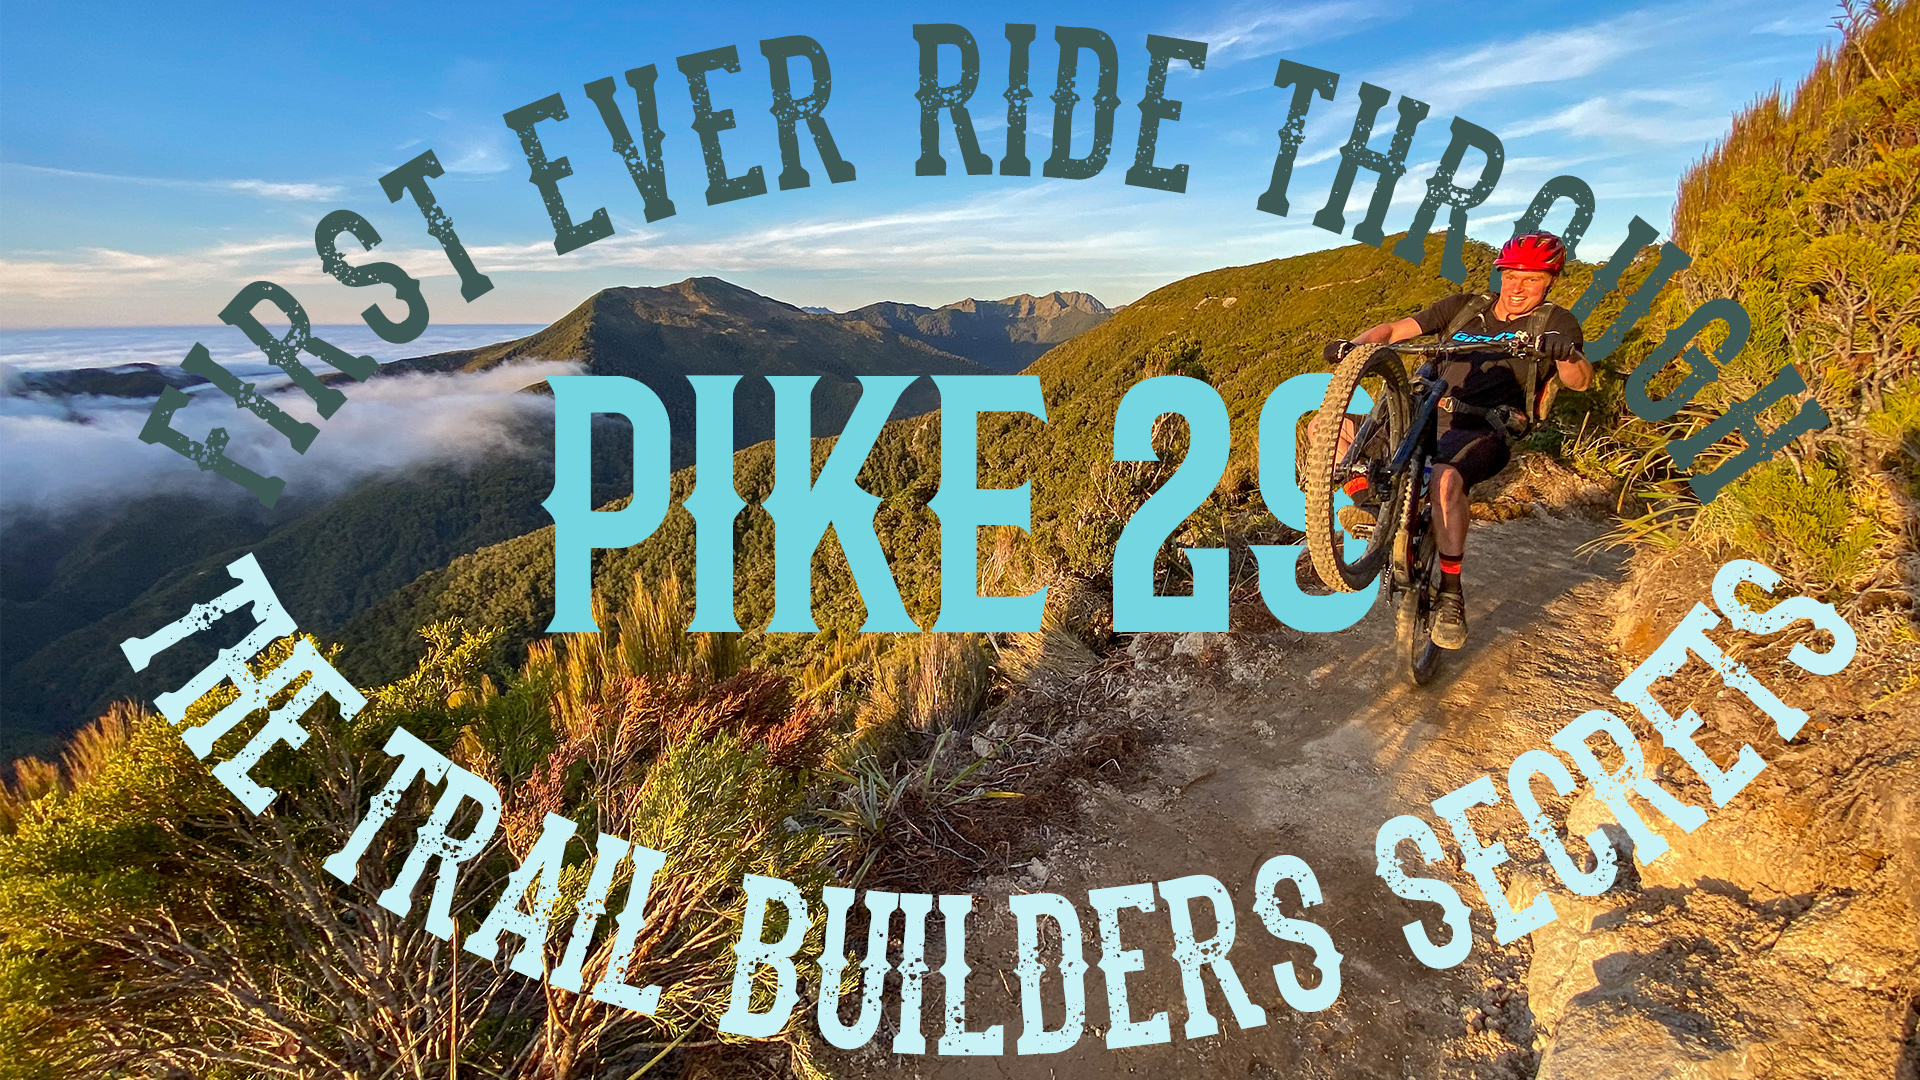 First ever ride through, Pike 29 Memorial Track!